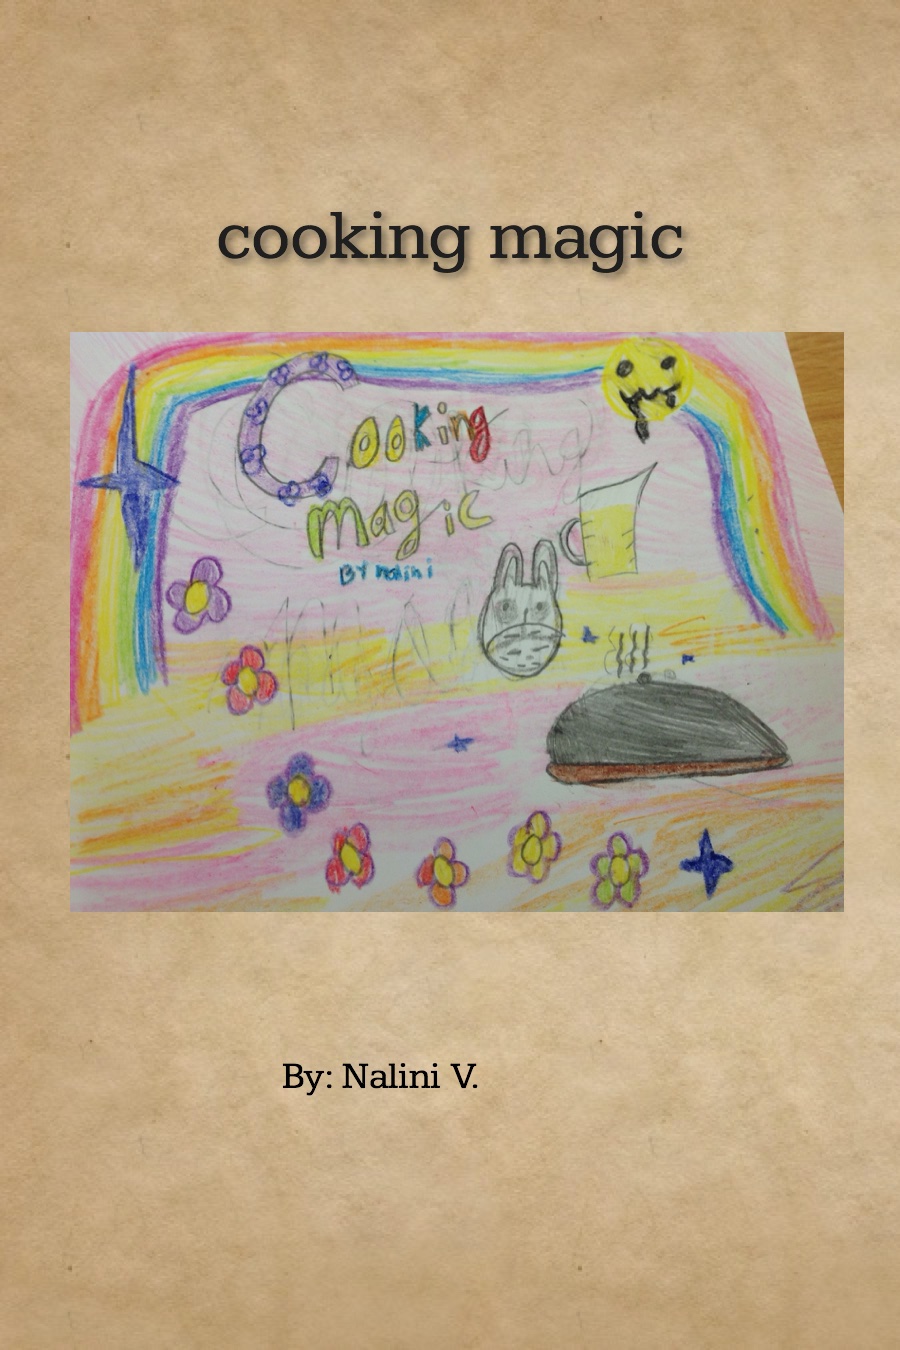 Cooking Magic by Nalini V